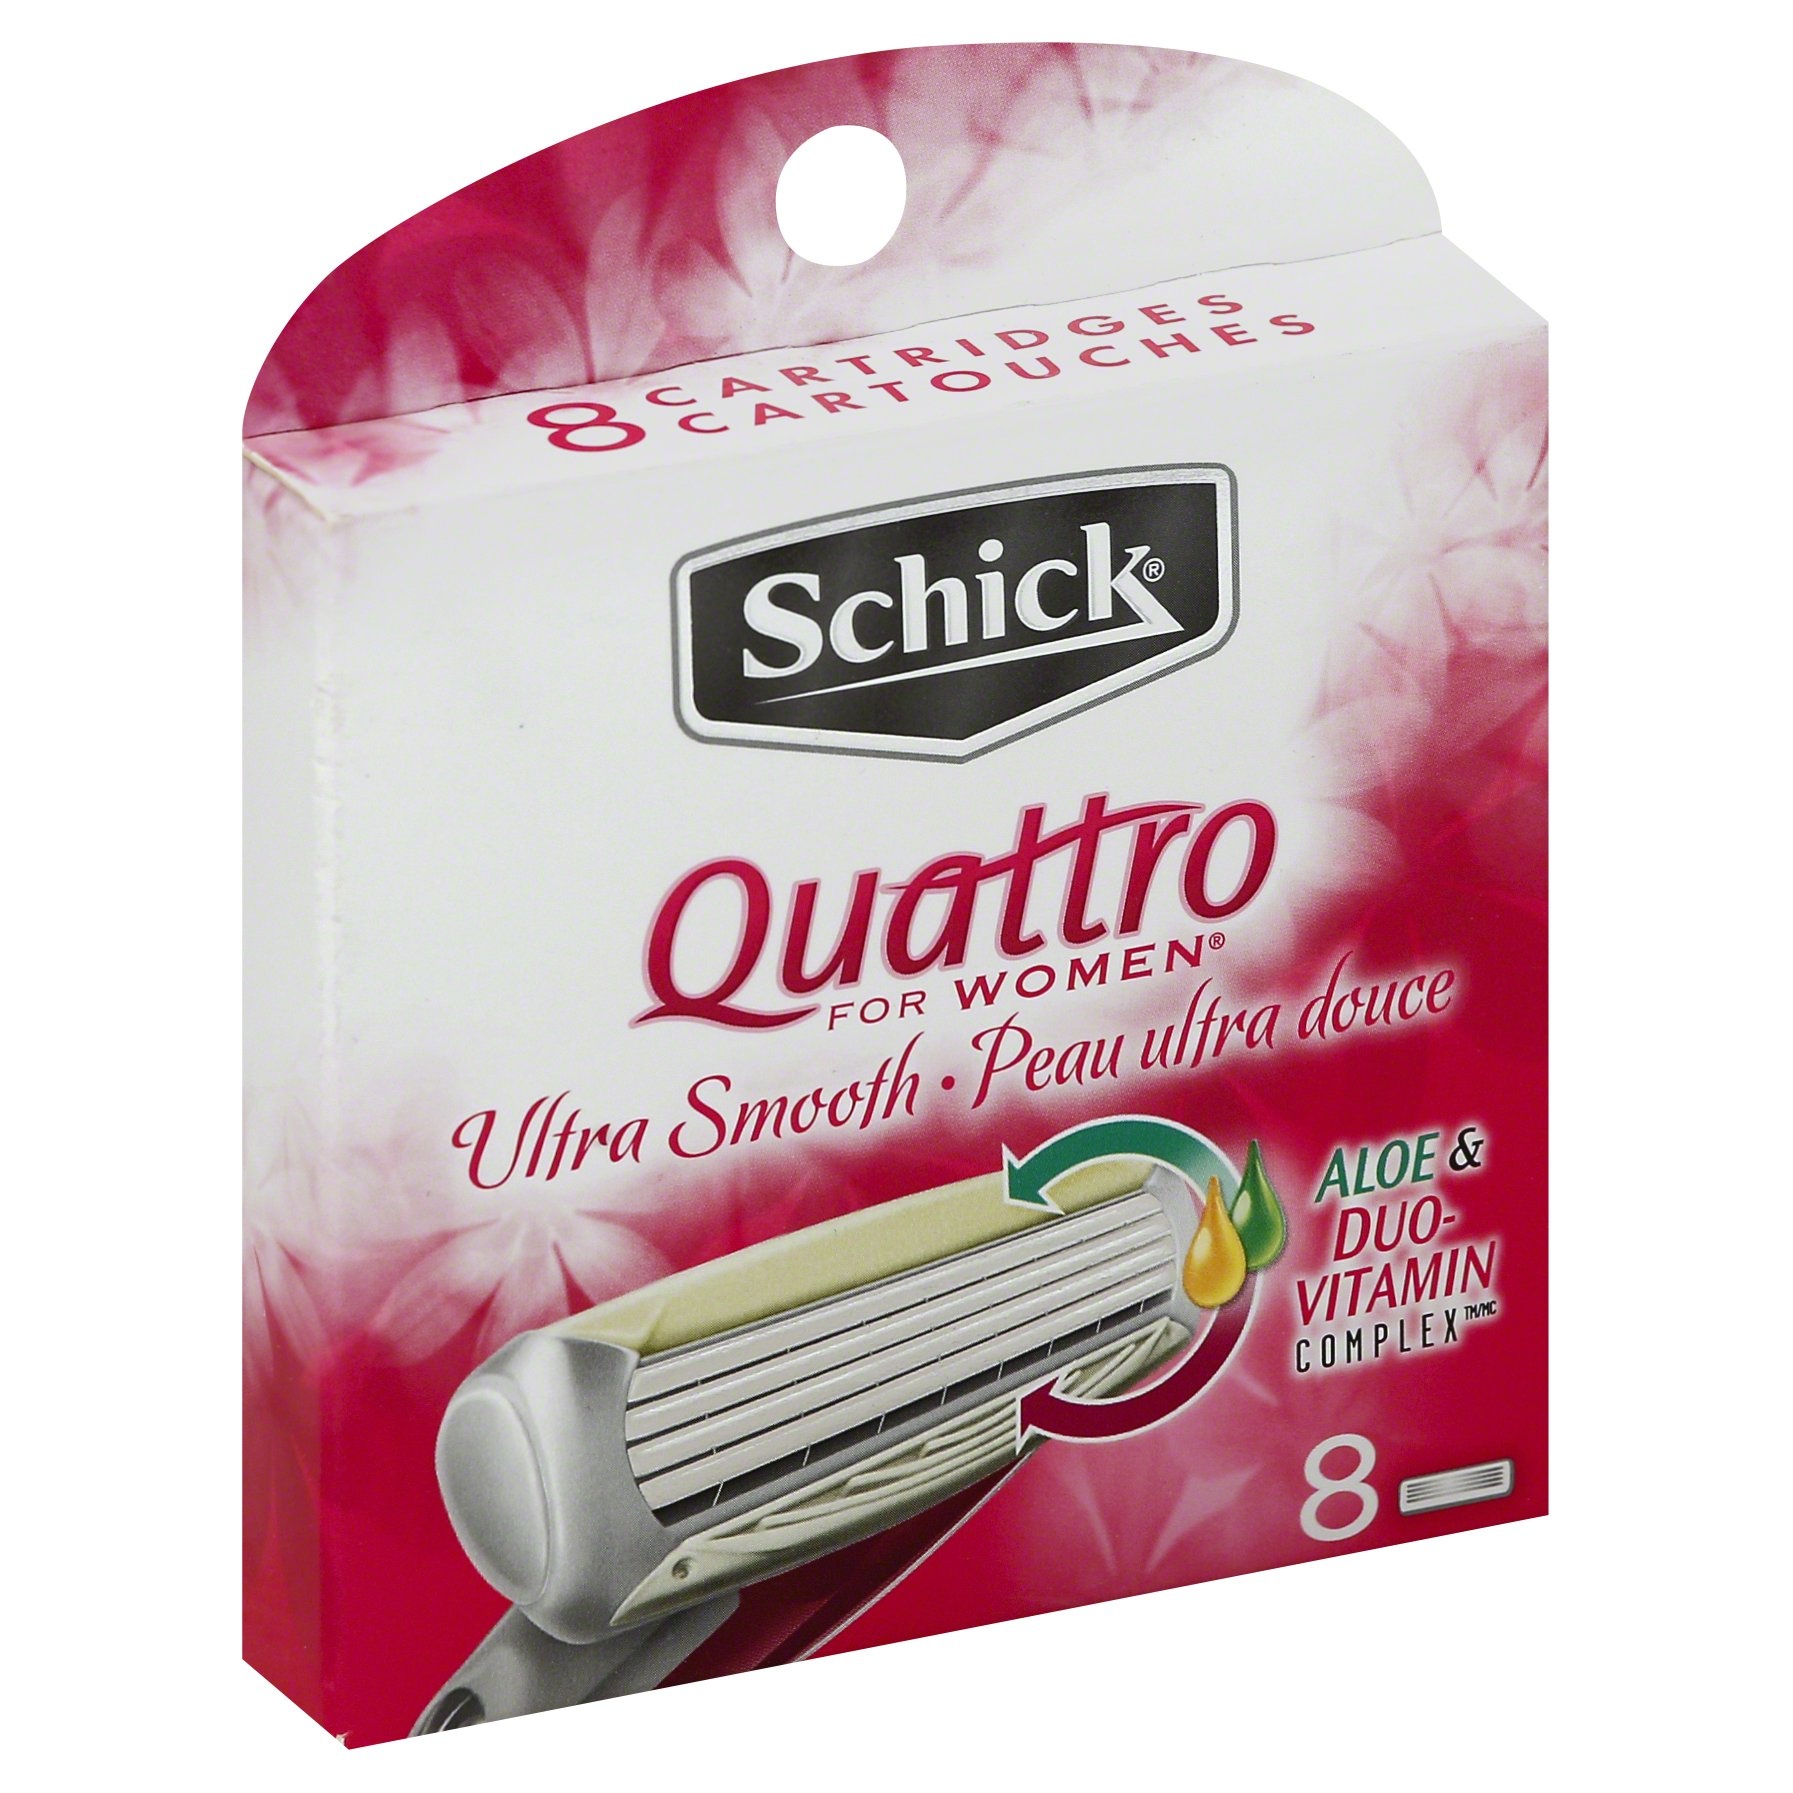 schick quattro for women raspberry rain 4 pack